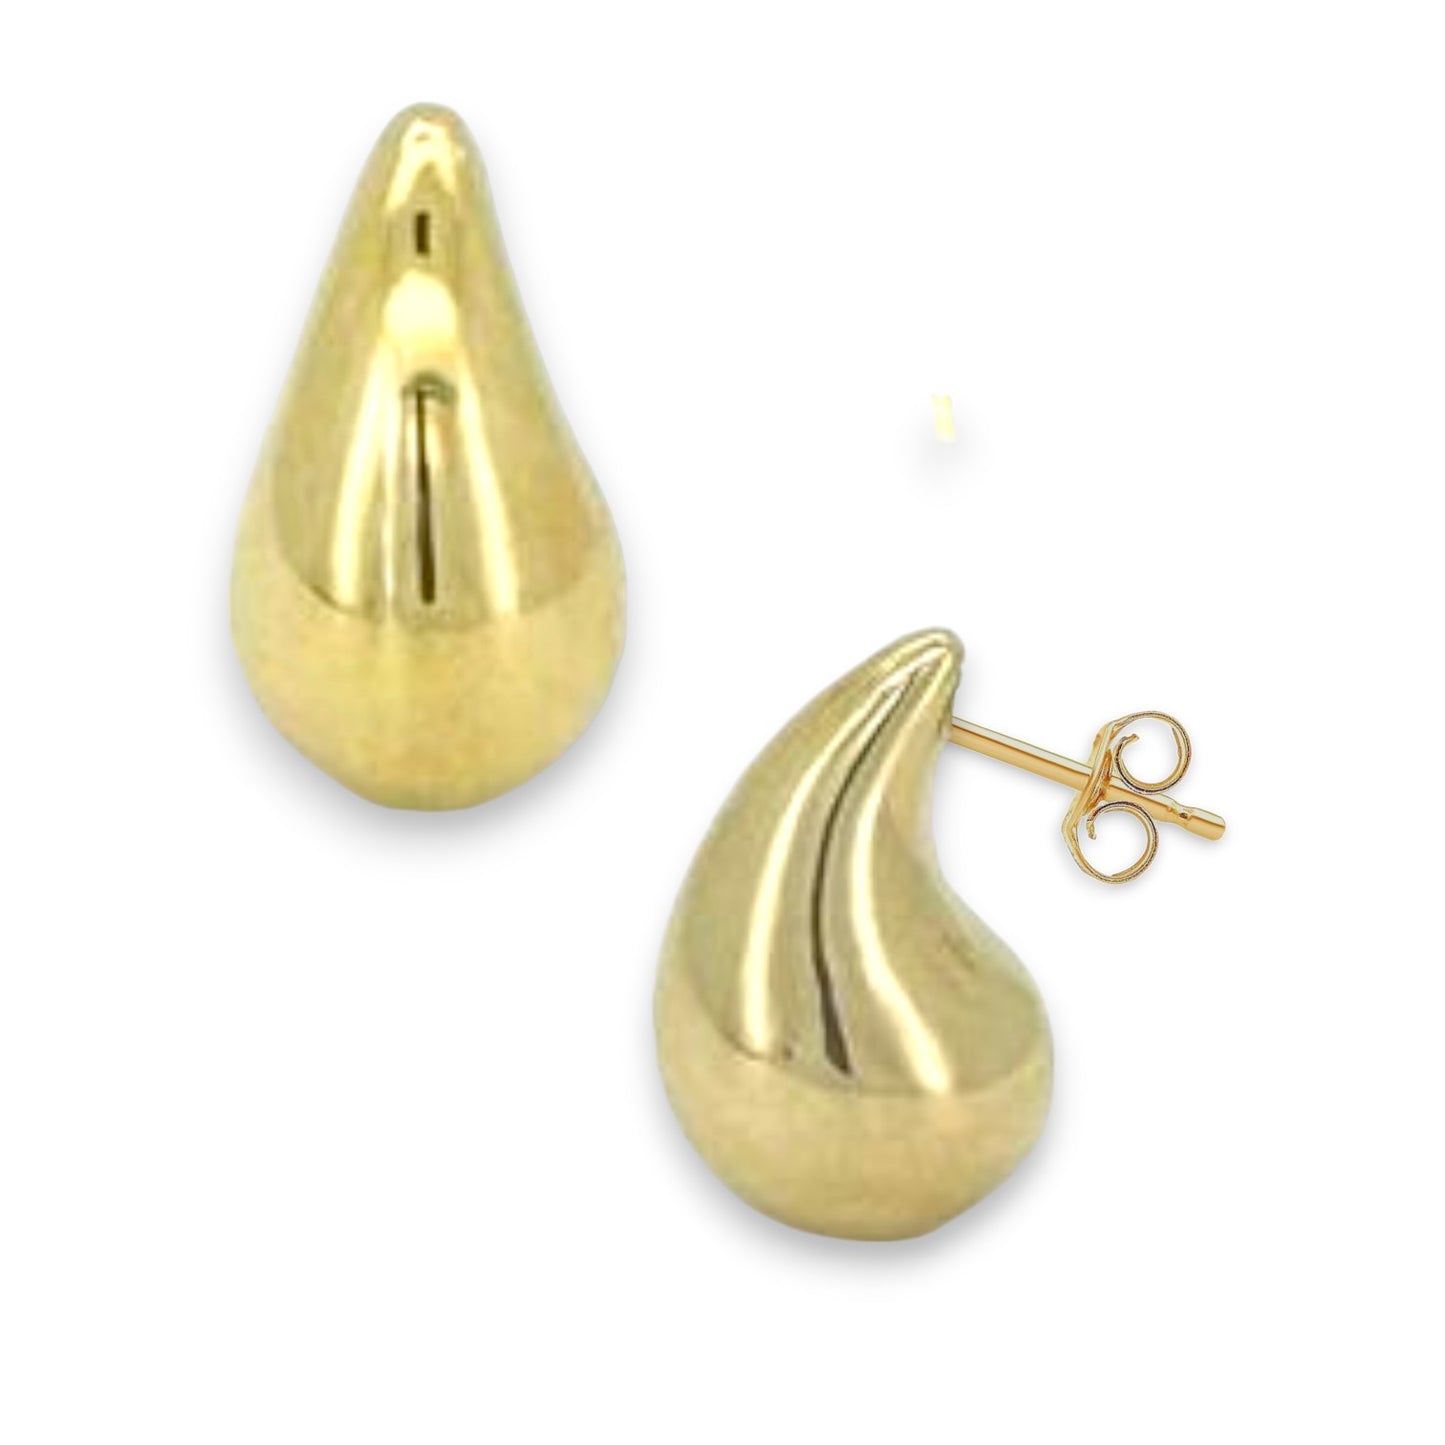 Water Drop Earrings - 10K Yellow Gold